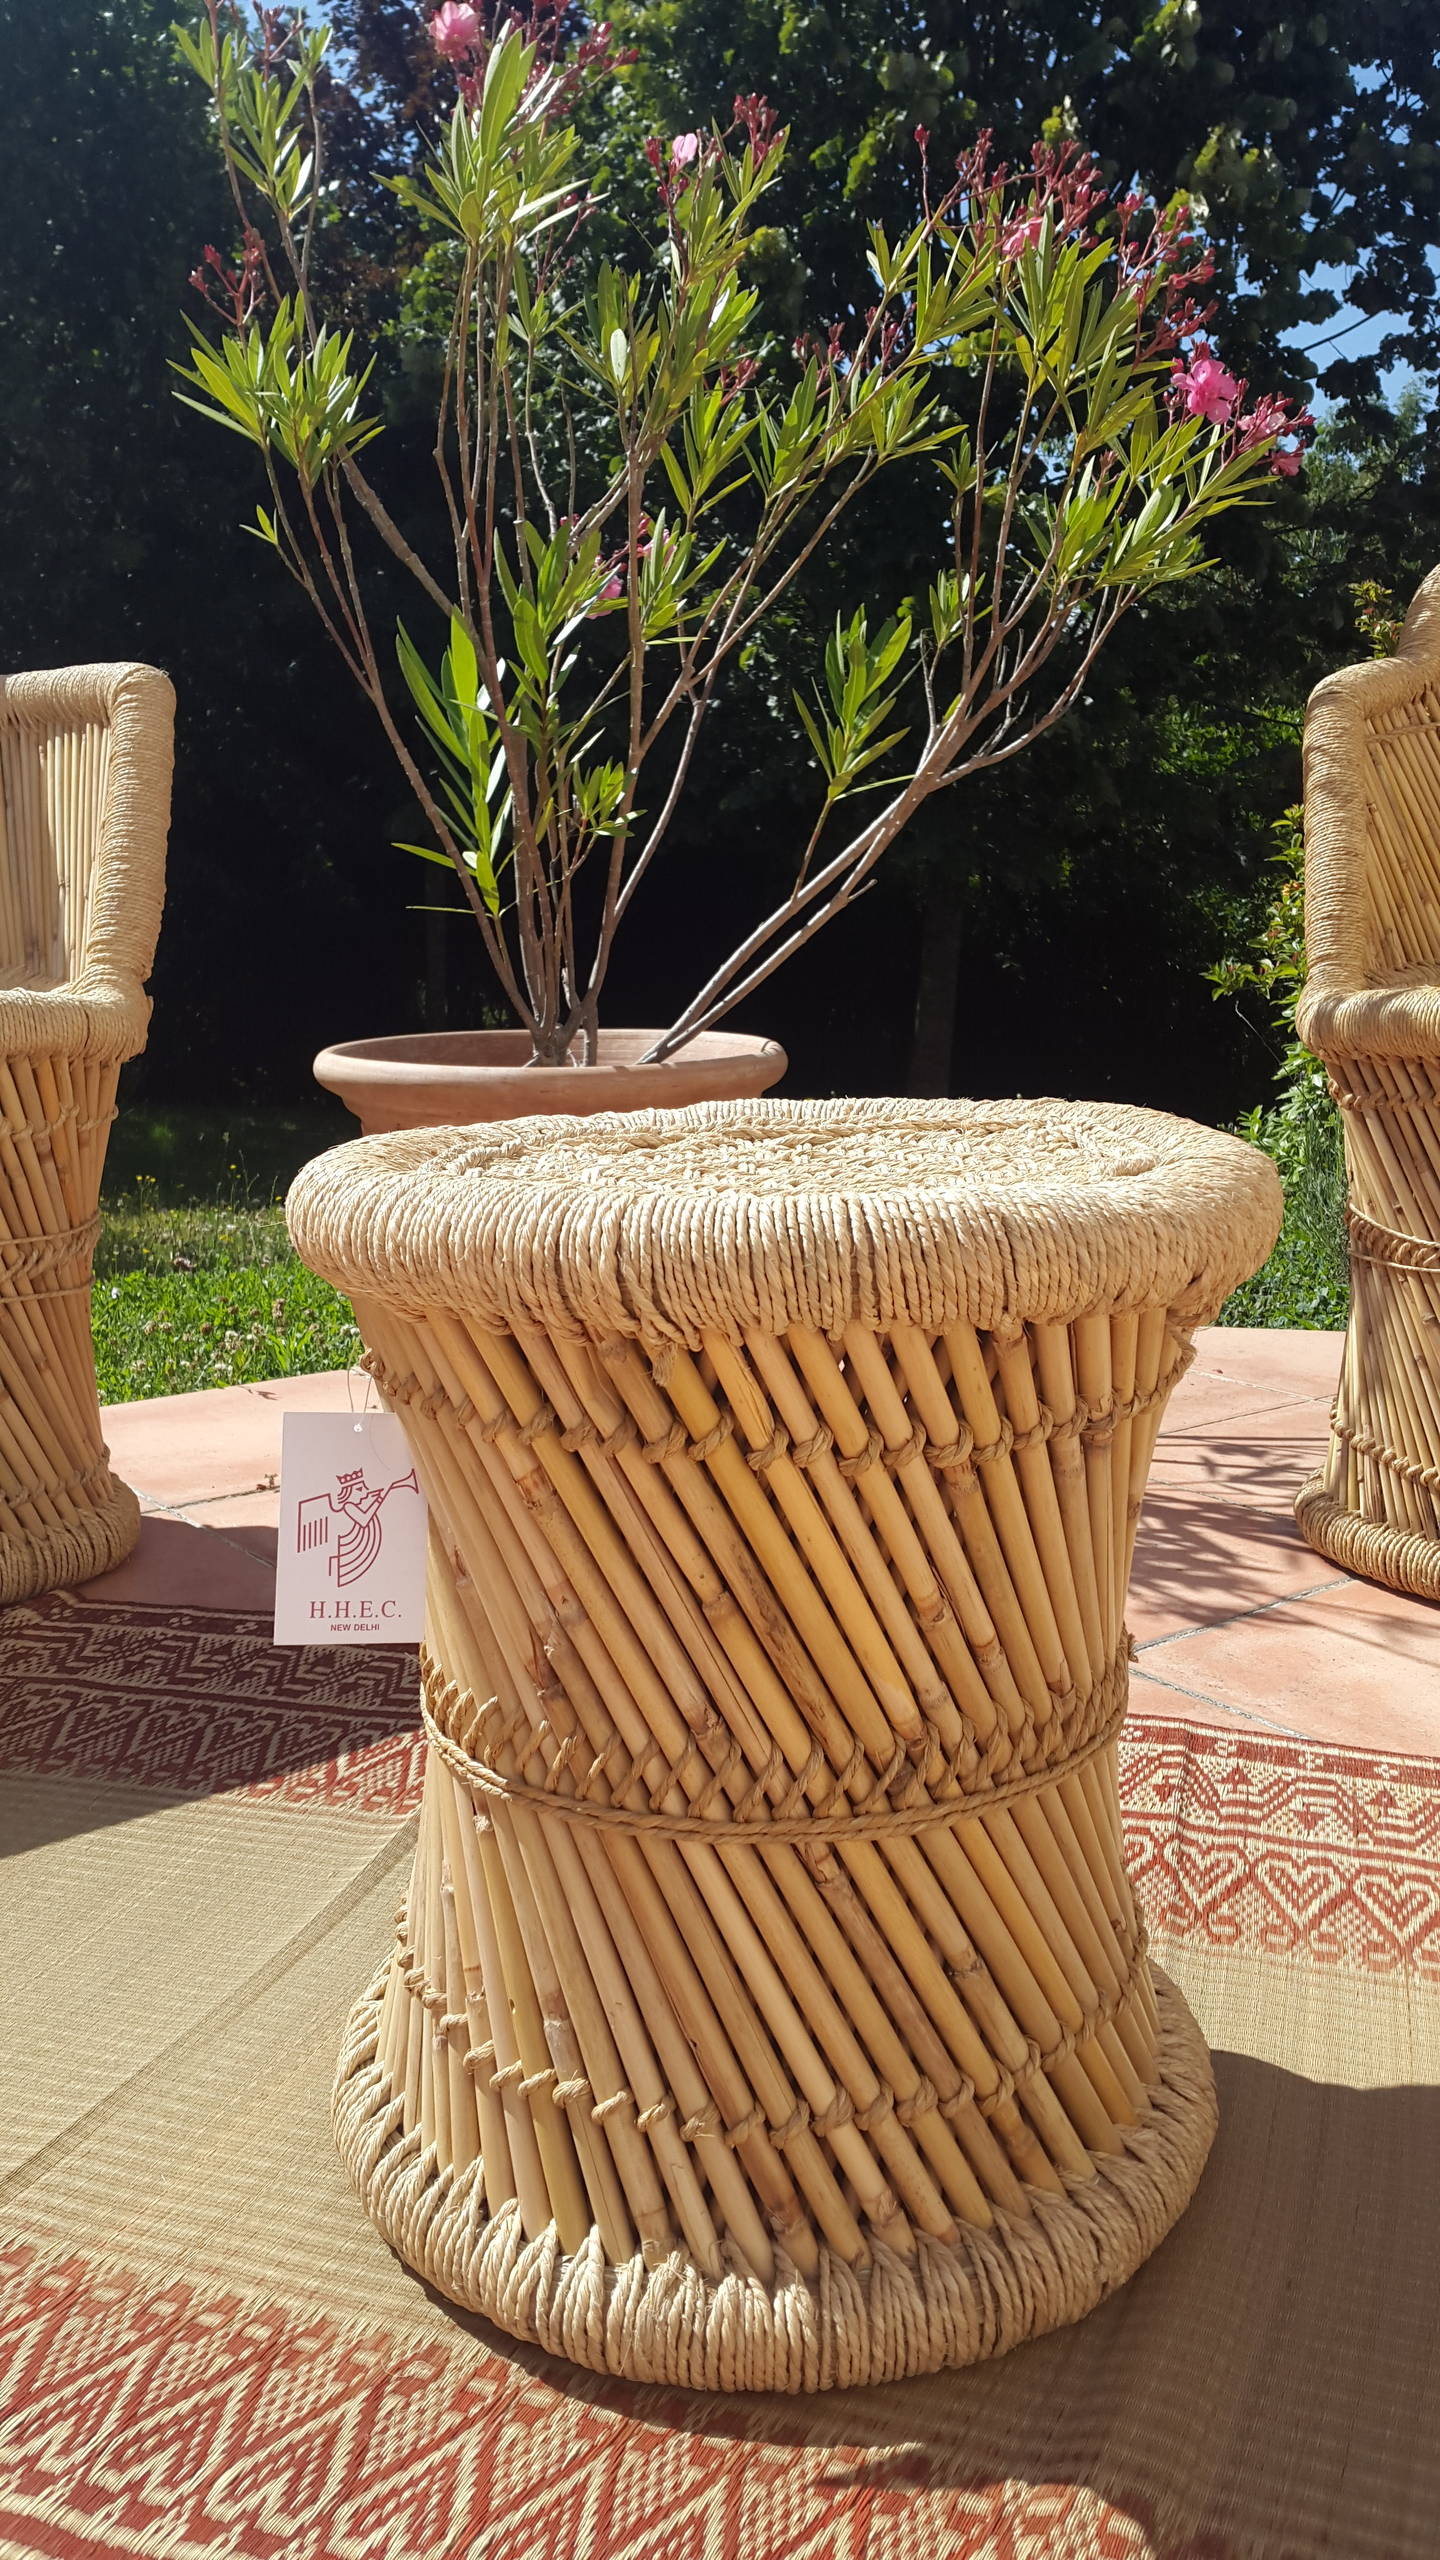 Tabouret en bambou et corde (artisanat indien)